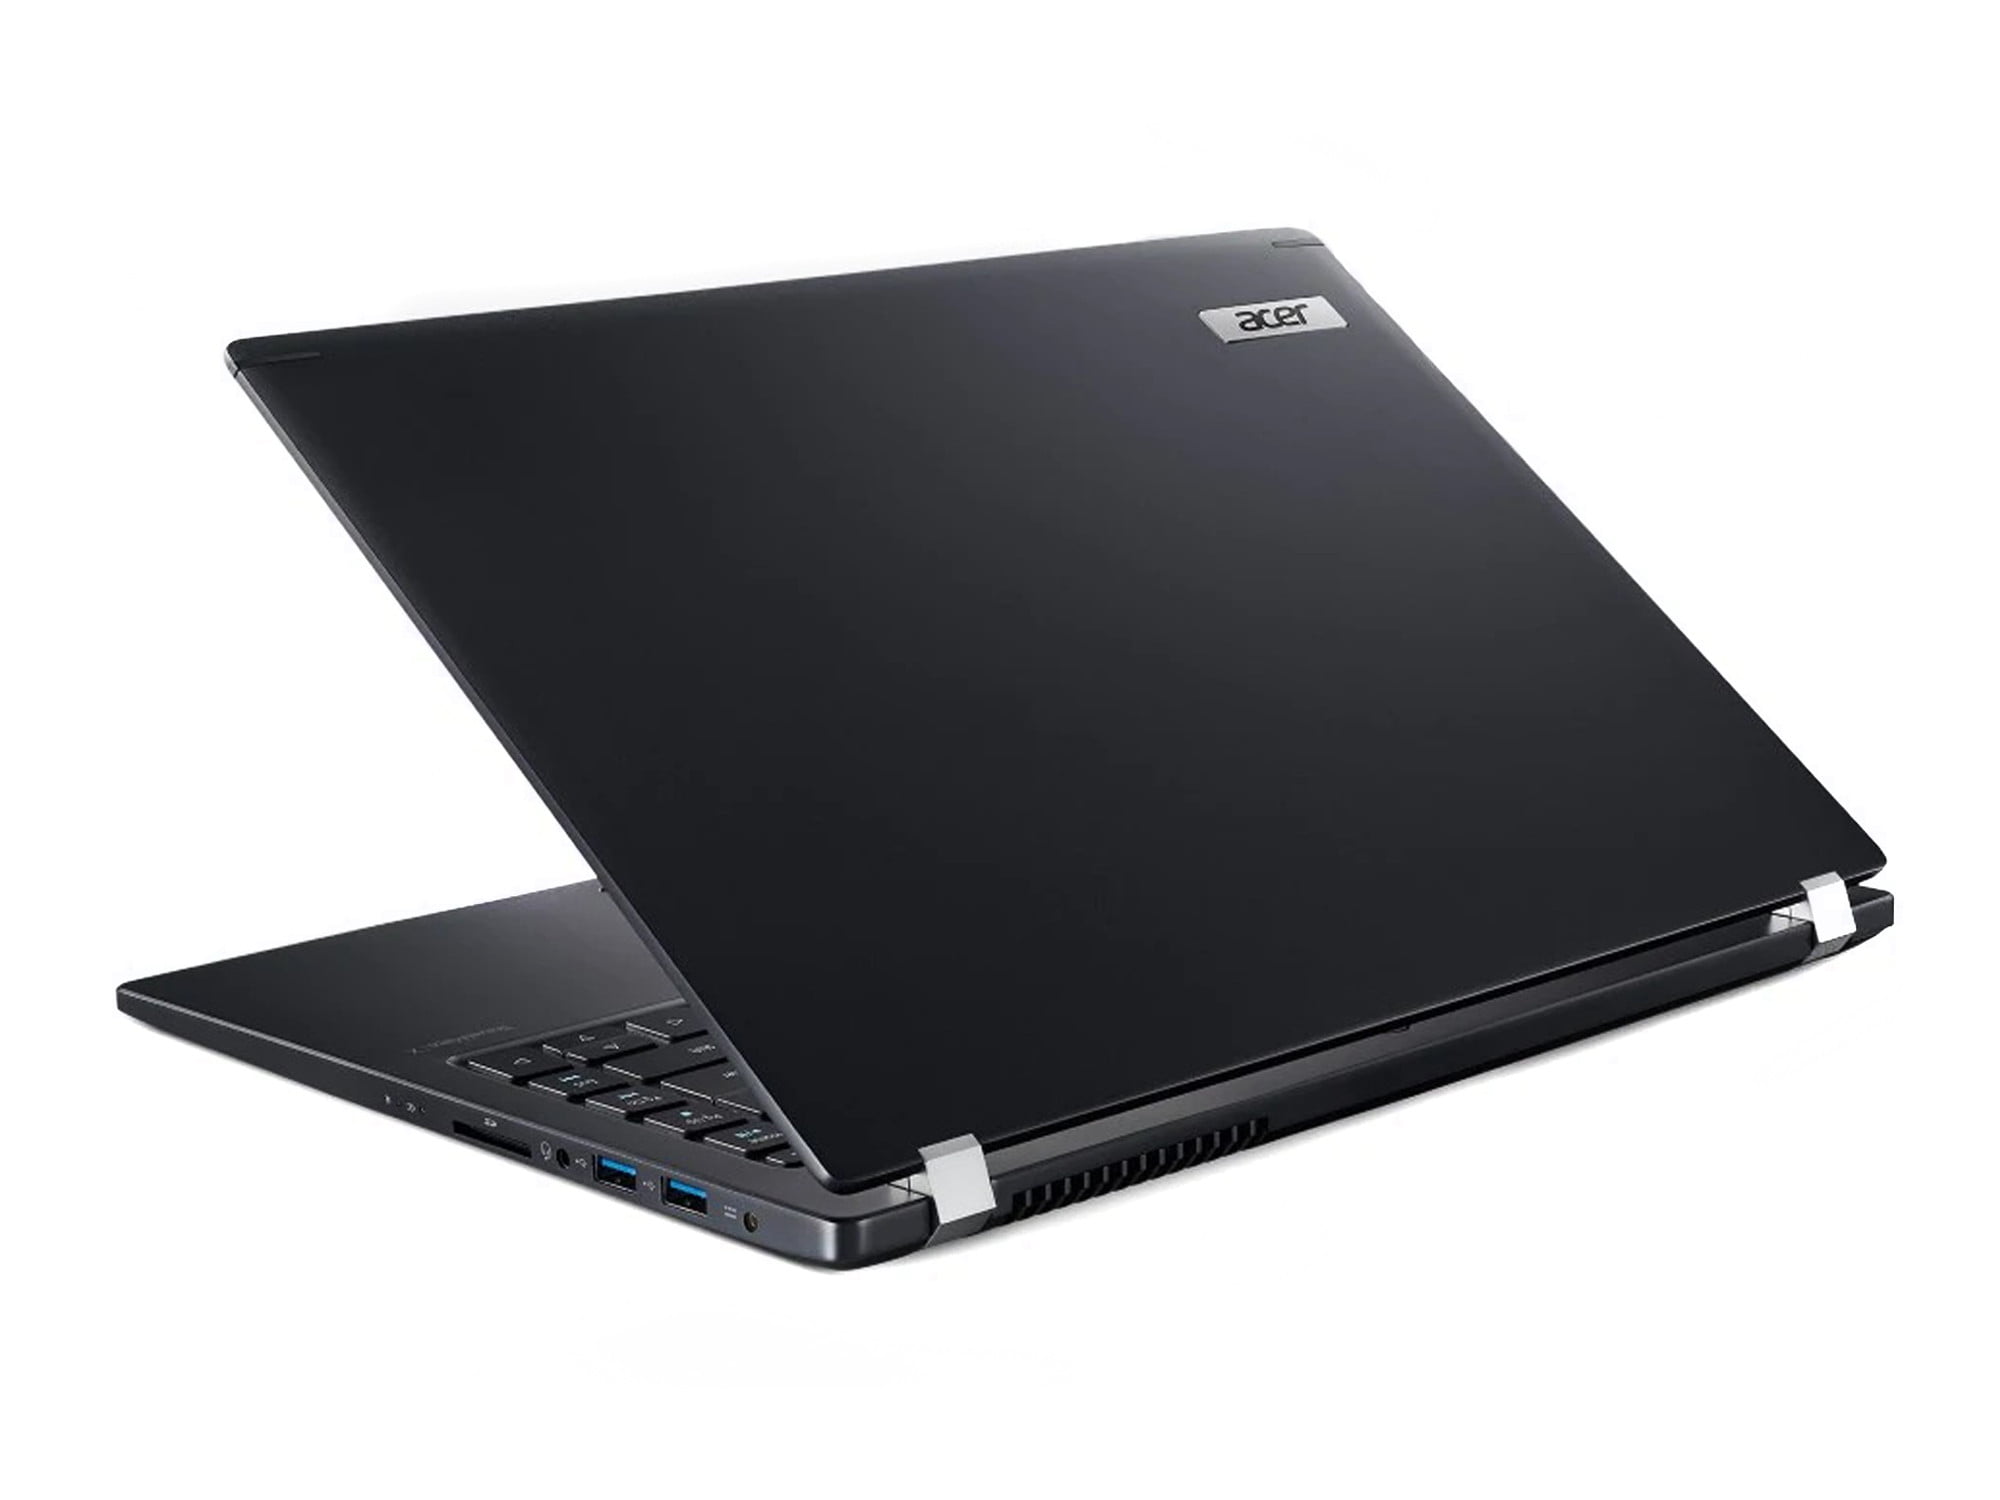 Fingerprint Reader Acer TravelMate X3 Thin & Light Business Laptop TMX3410-M-5608 256GB SSD 14 FHD IPS Renewed Win 10 Pro Intel Core i5-8250U 8GB DDR4 Mil-Spec 15 Hrs Battery TPM 2.0 